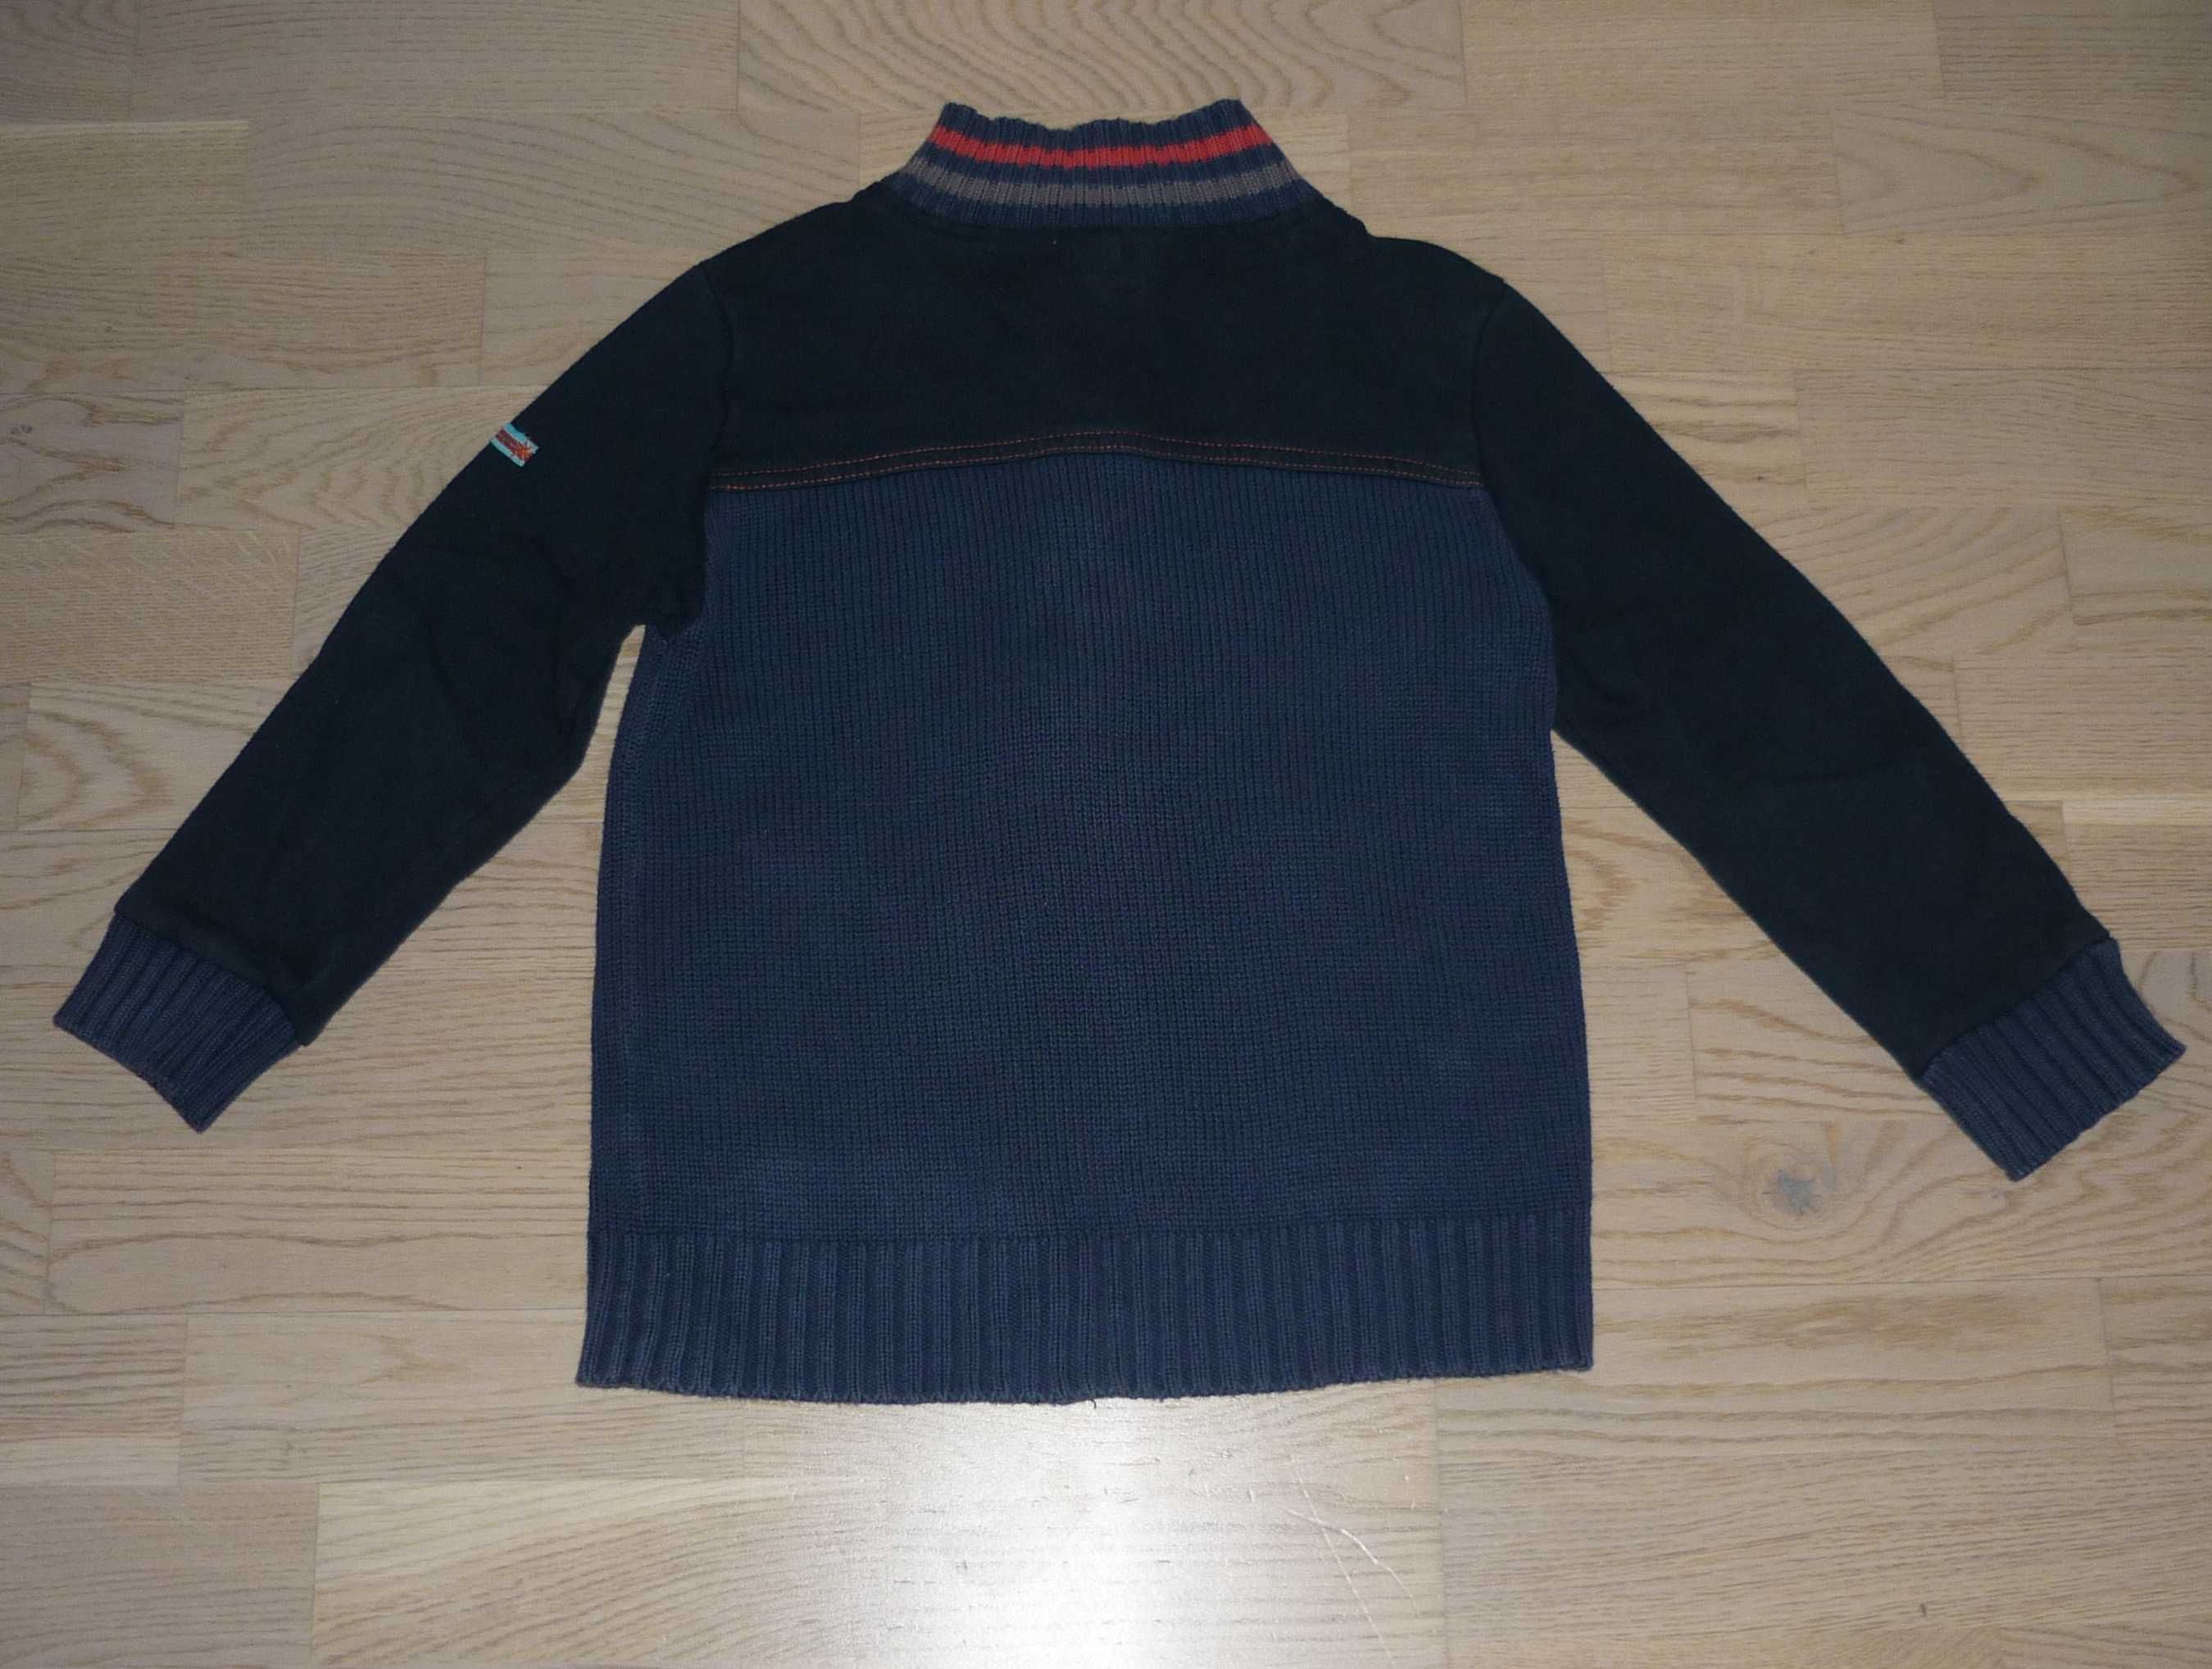 Granatowy Sweter 5.10.15 zasuwany na zamek 6-7 lat Sweterek